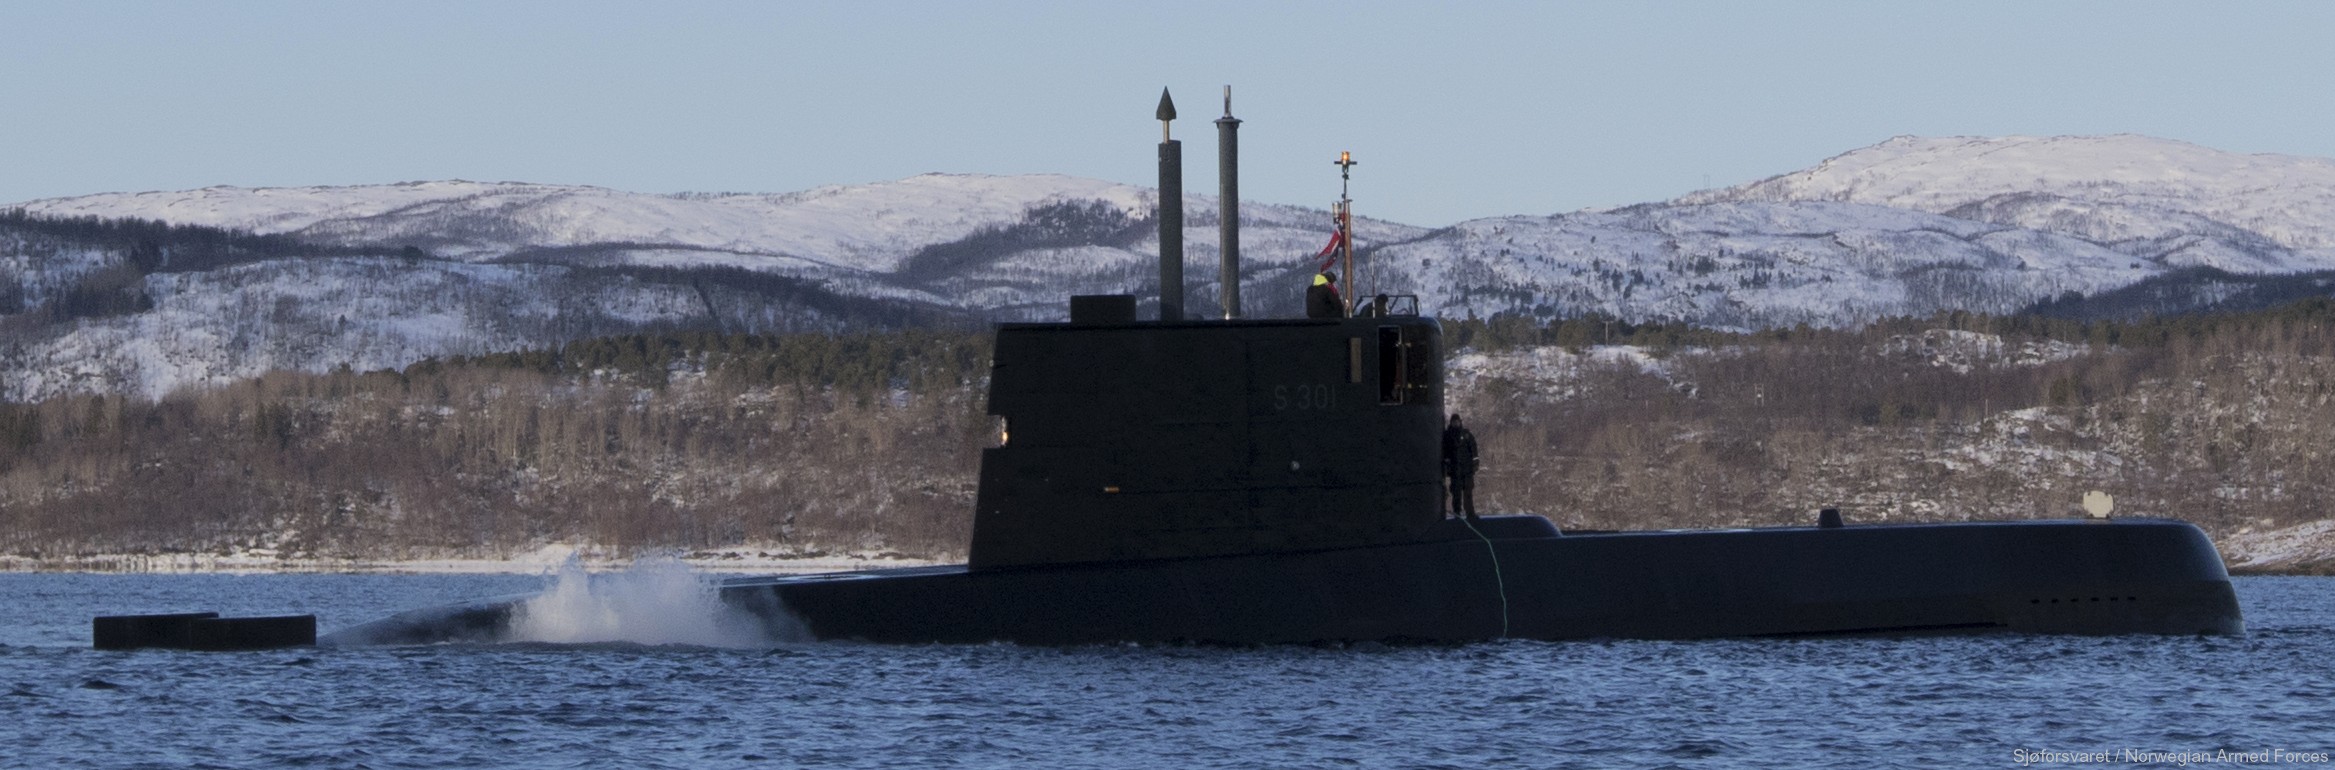 s-301 hnoms knm utsira ula class submarine type 210 attack ssk undervannsbåt royal norwegian navy sjøforsvaret 13